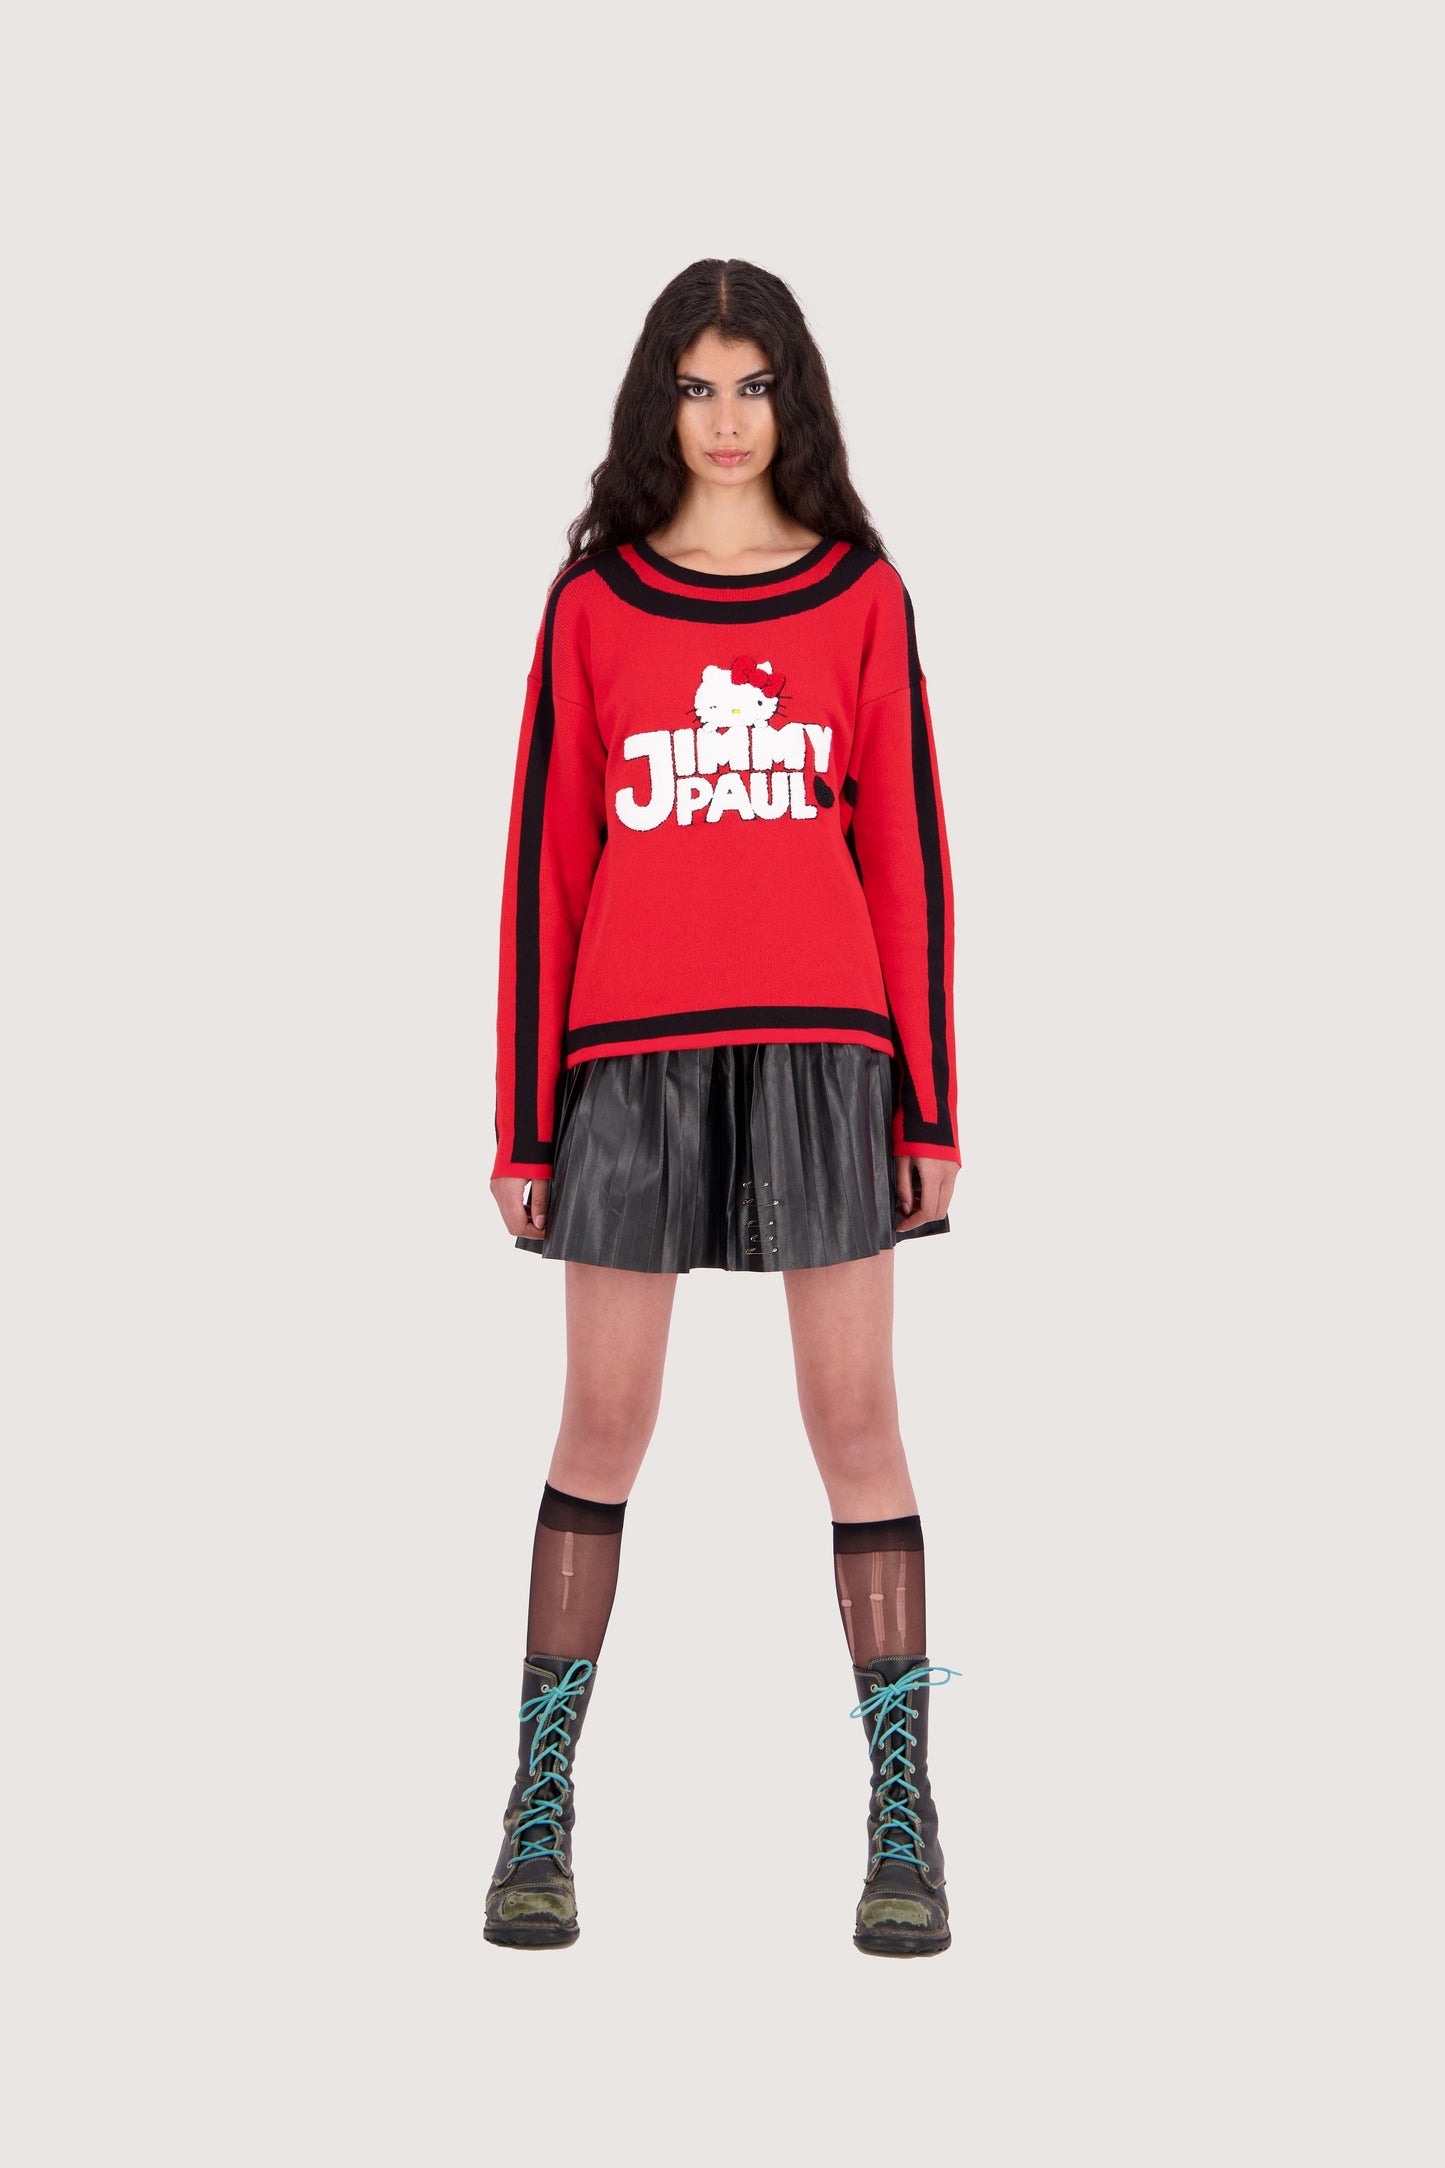 JimmyPaul x Hello Kitty - Red/Black Block Sweater